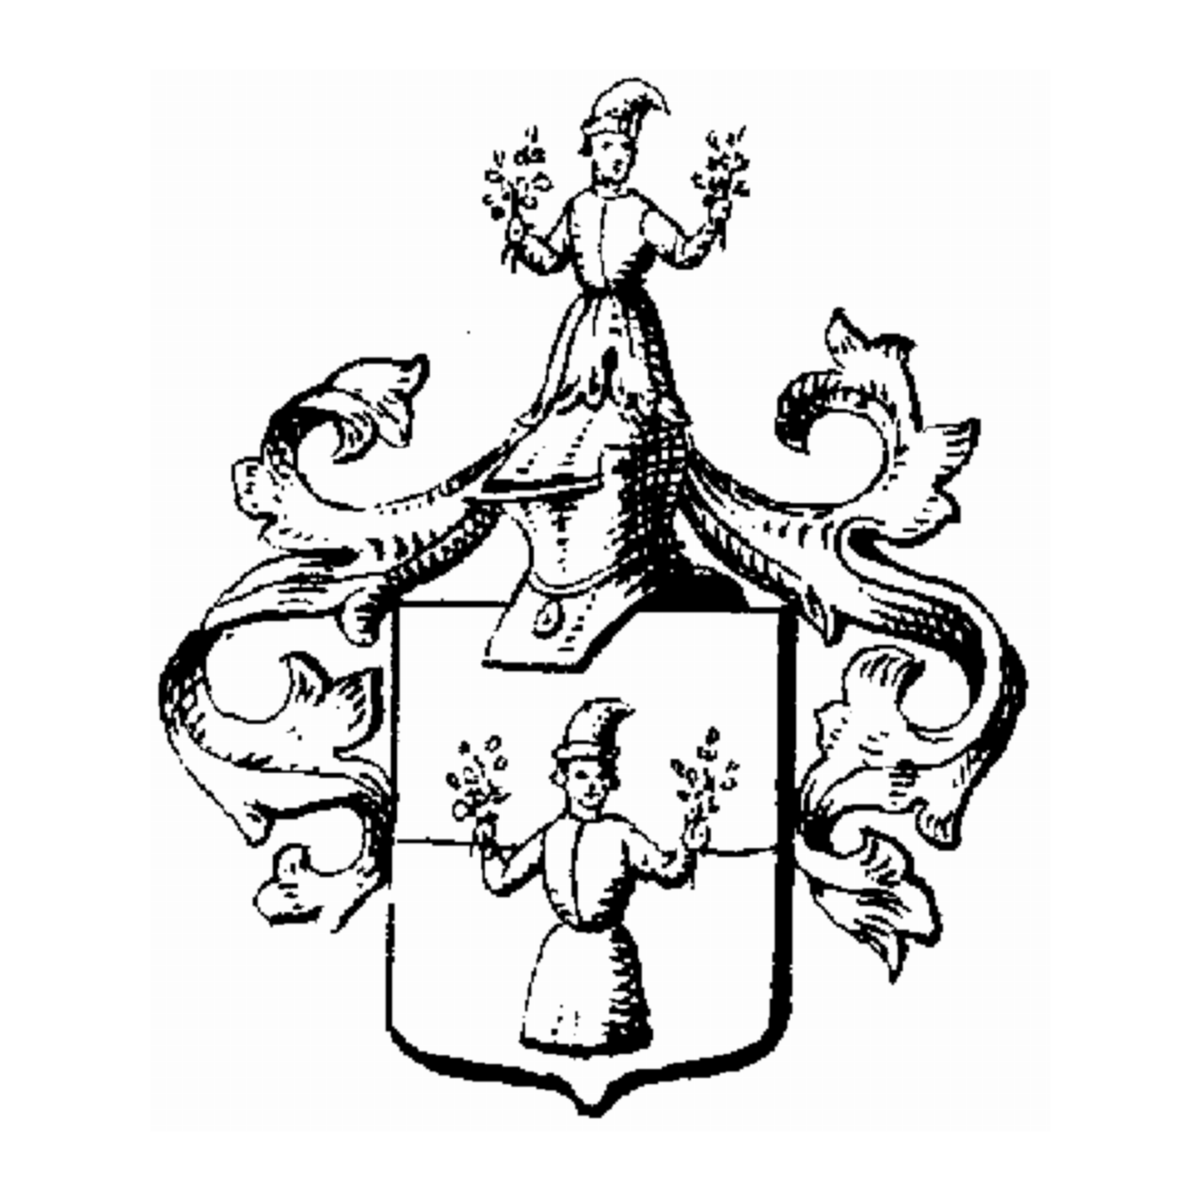 Wappen der Familie Kempfener